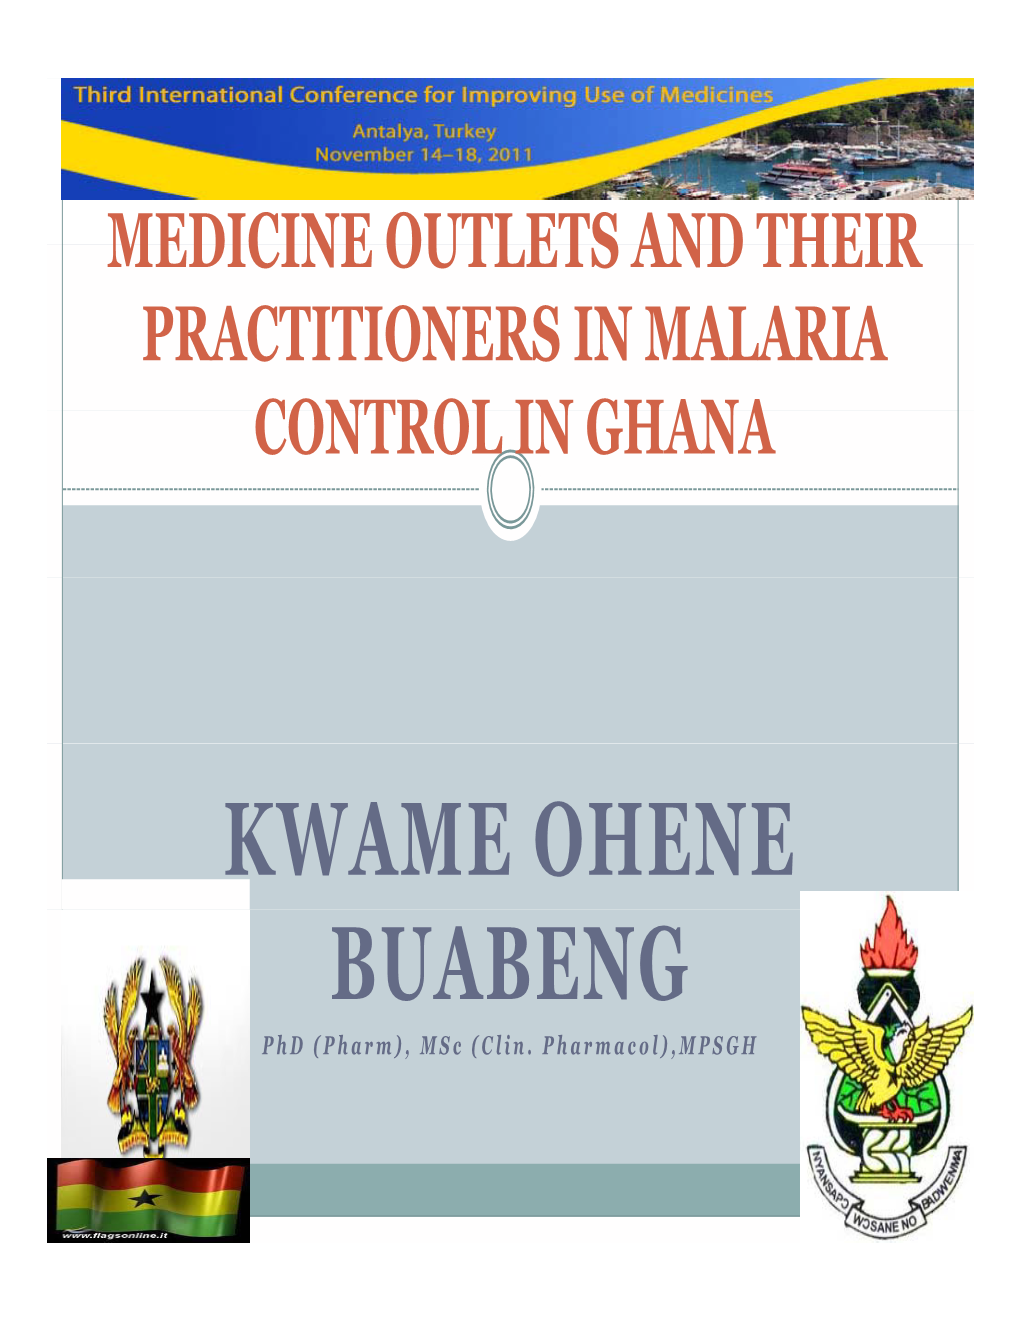 KWAME OHENE BUABENG Phd (Pharm), Msc (Clin